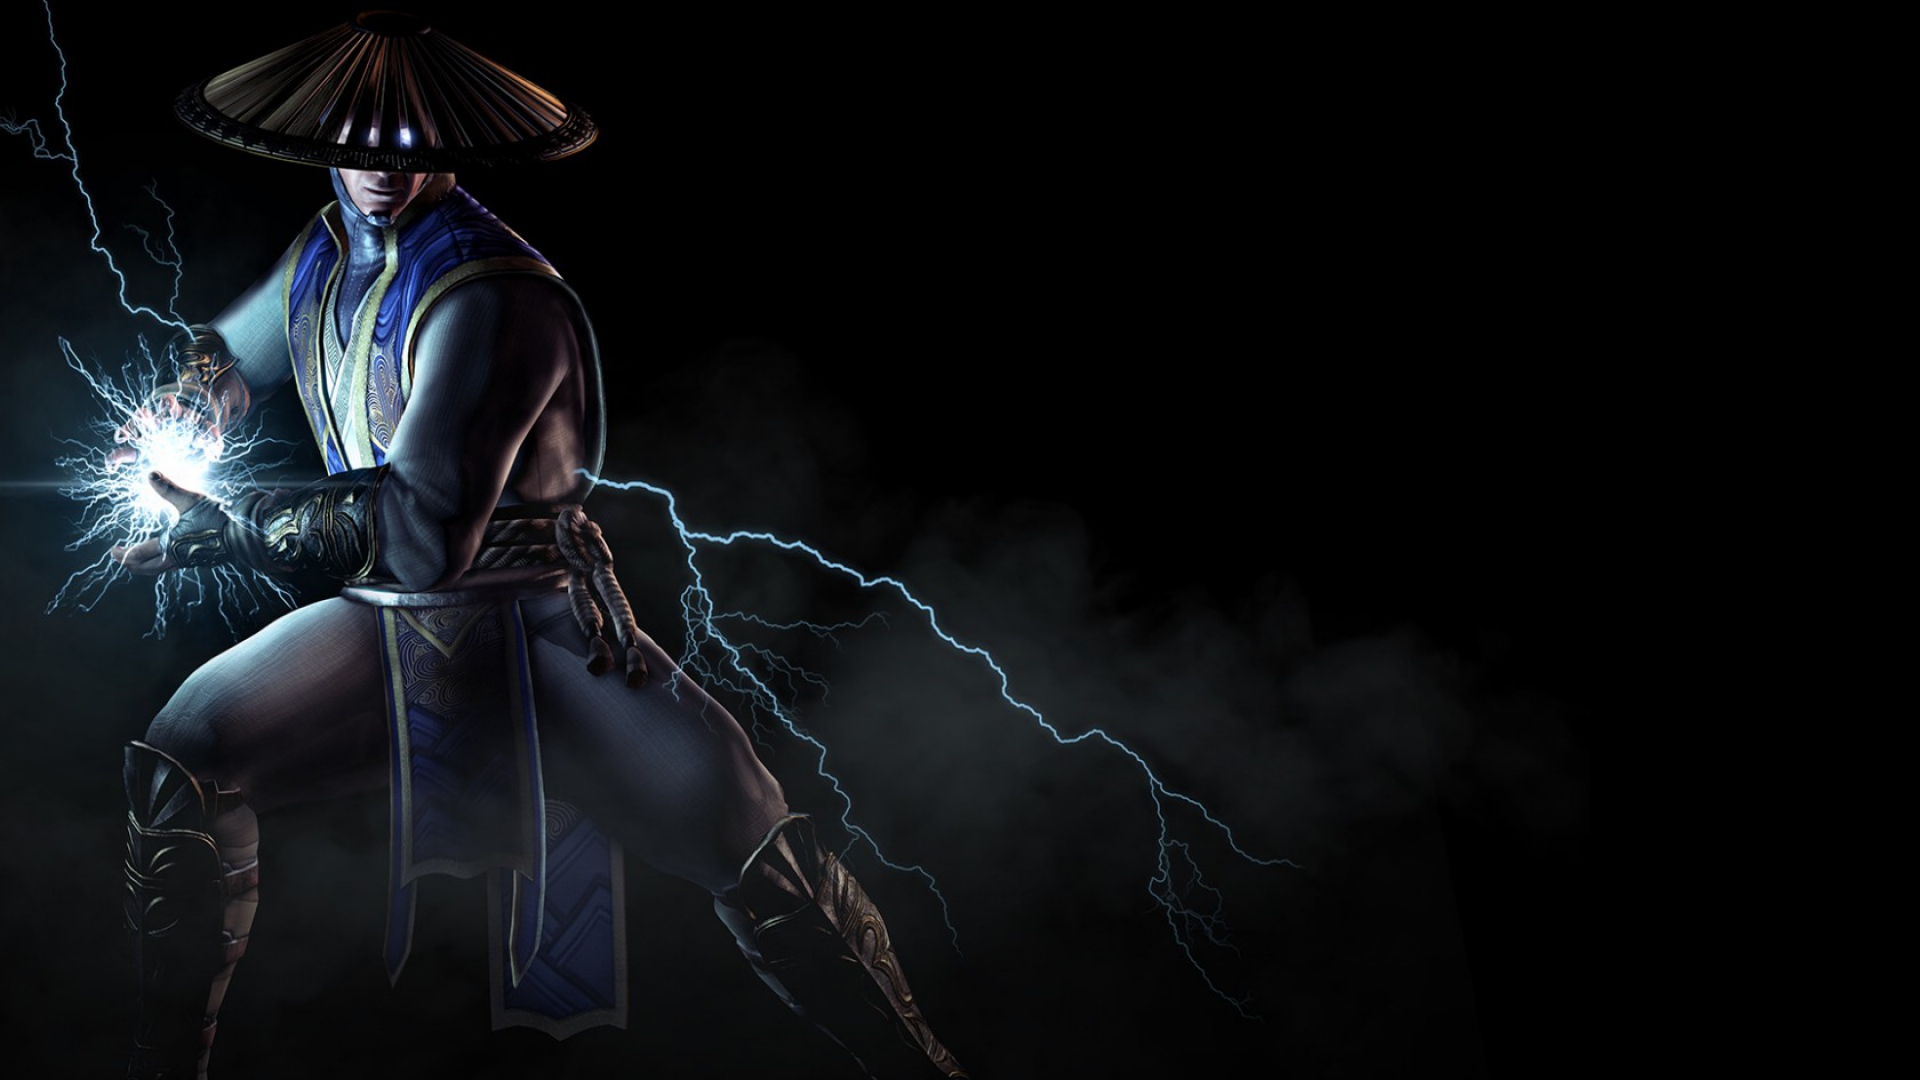 HQ Raiden (Mortal Kombat) Background